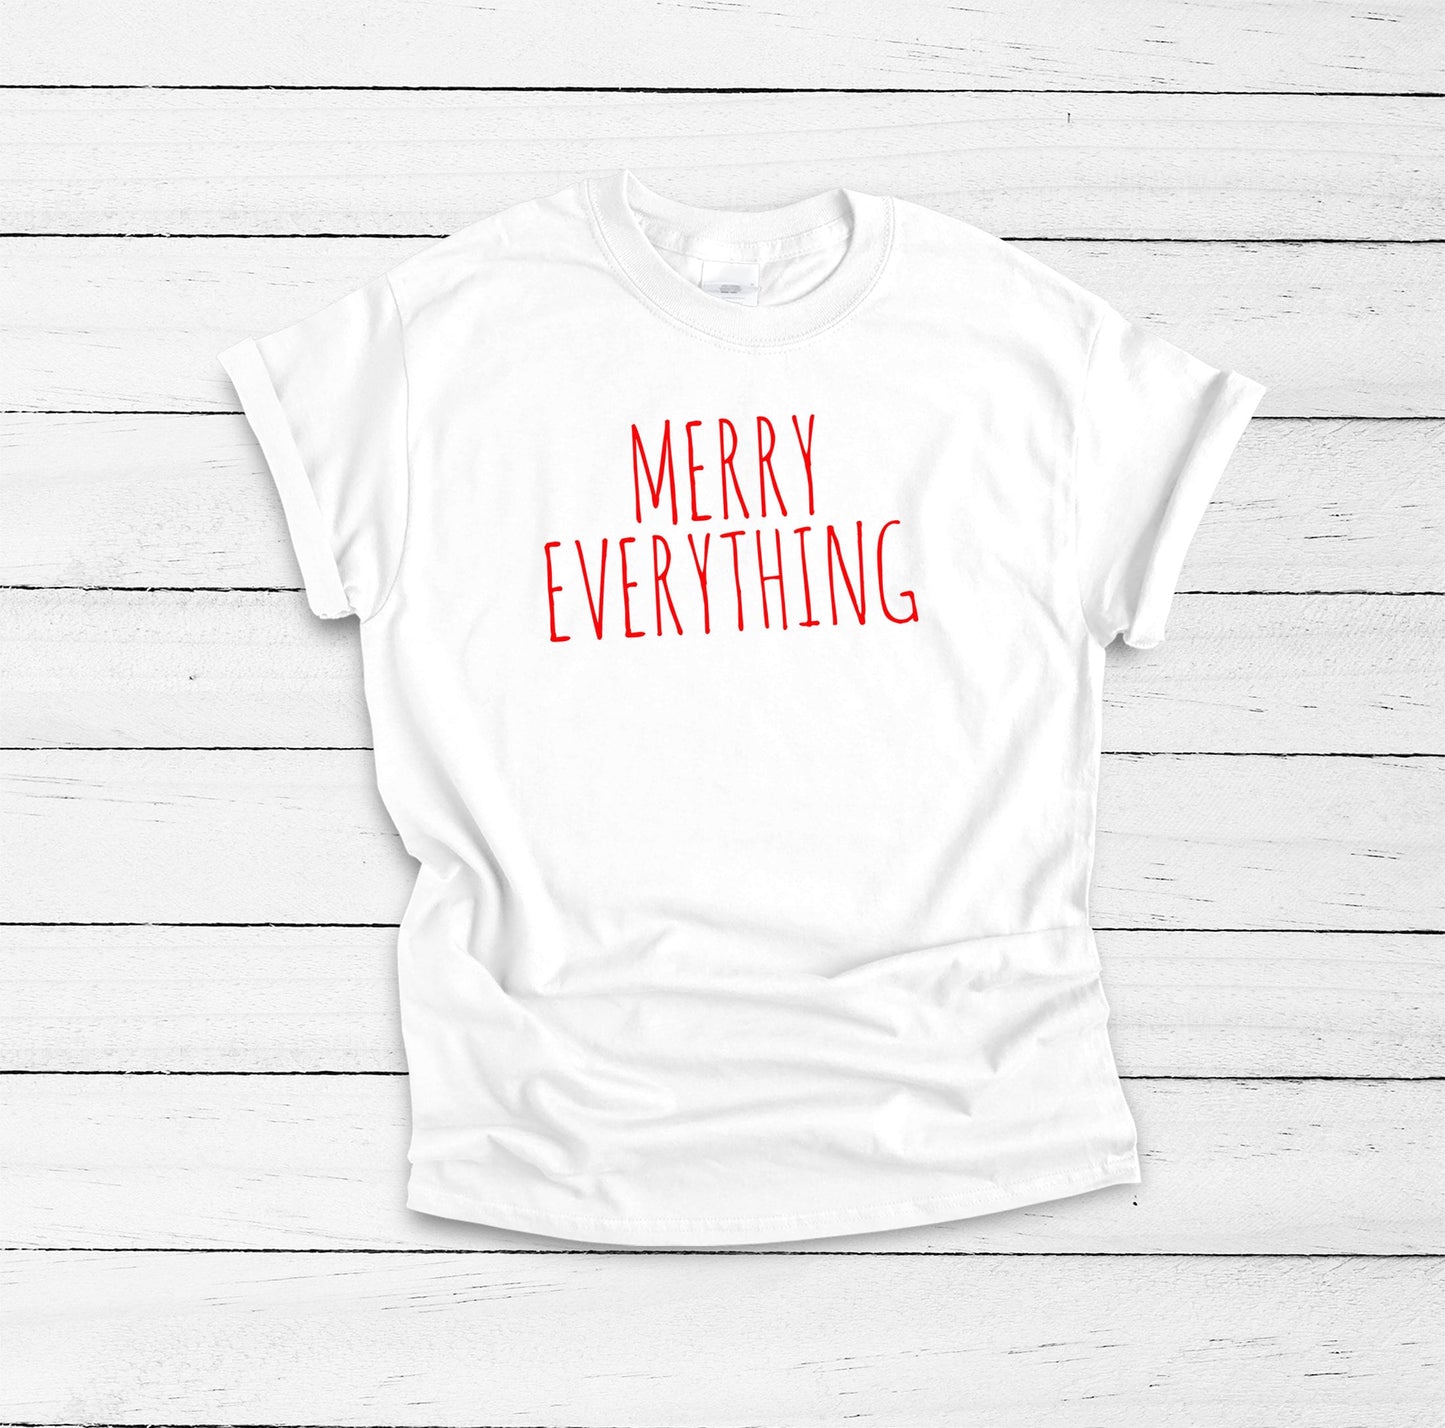 Merry Everything Shirt, Christmas Present, Merry Christmas Gift Idea, Mom Christmas Gift, Family Christmas Gifts, Christmas Outfit, T Shirt